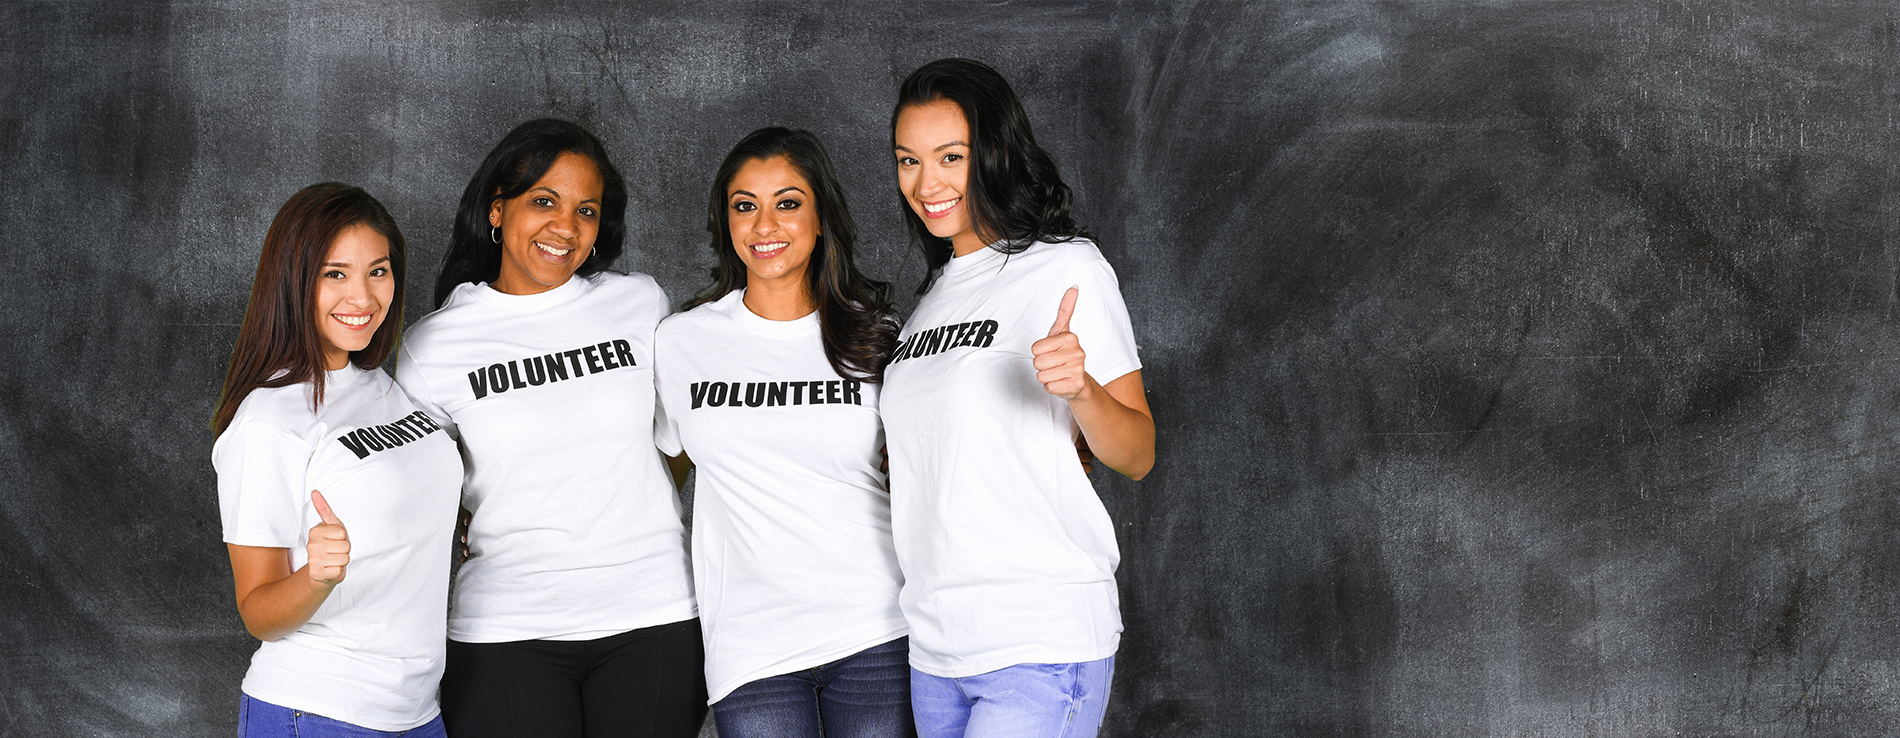 Four girls smiling in white t-shirts that say VOLUNTEER